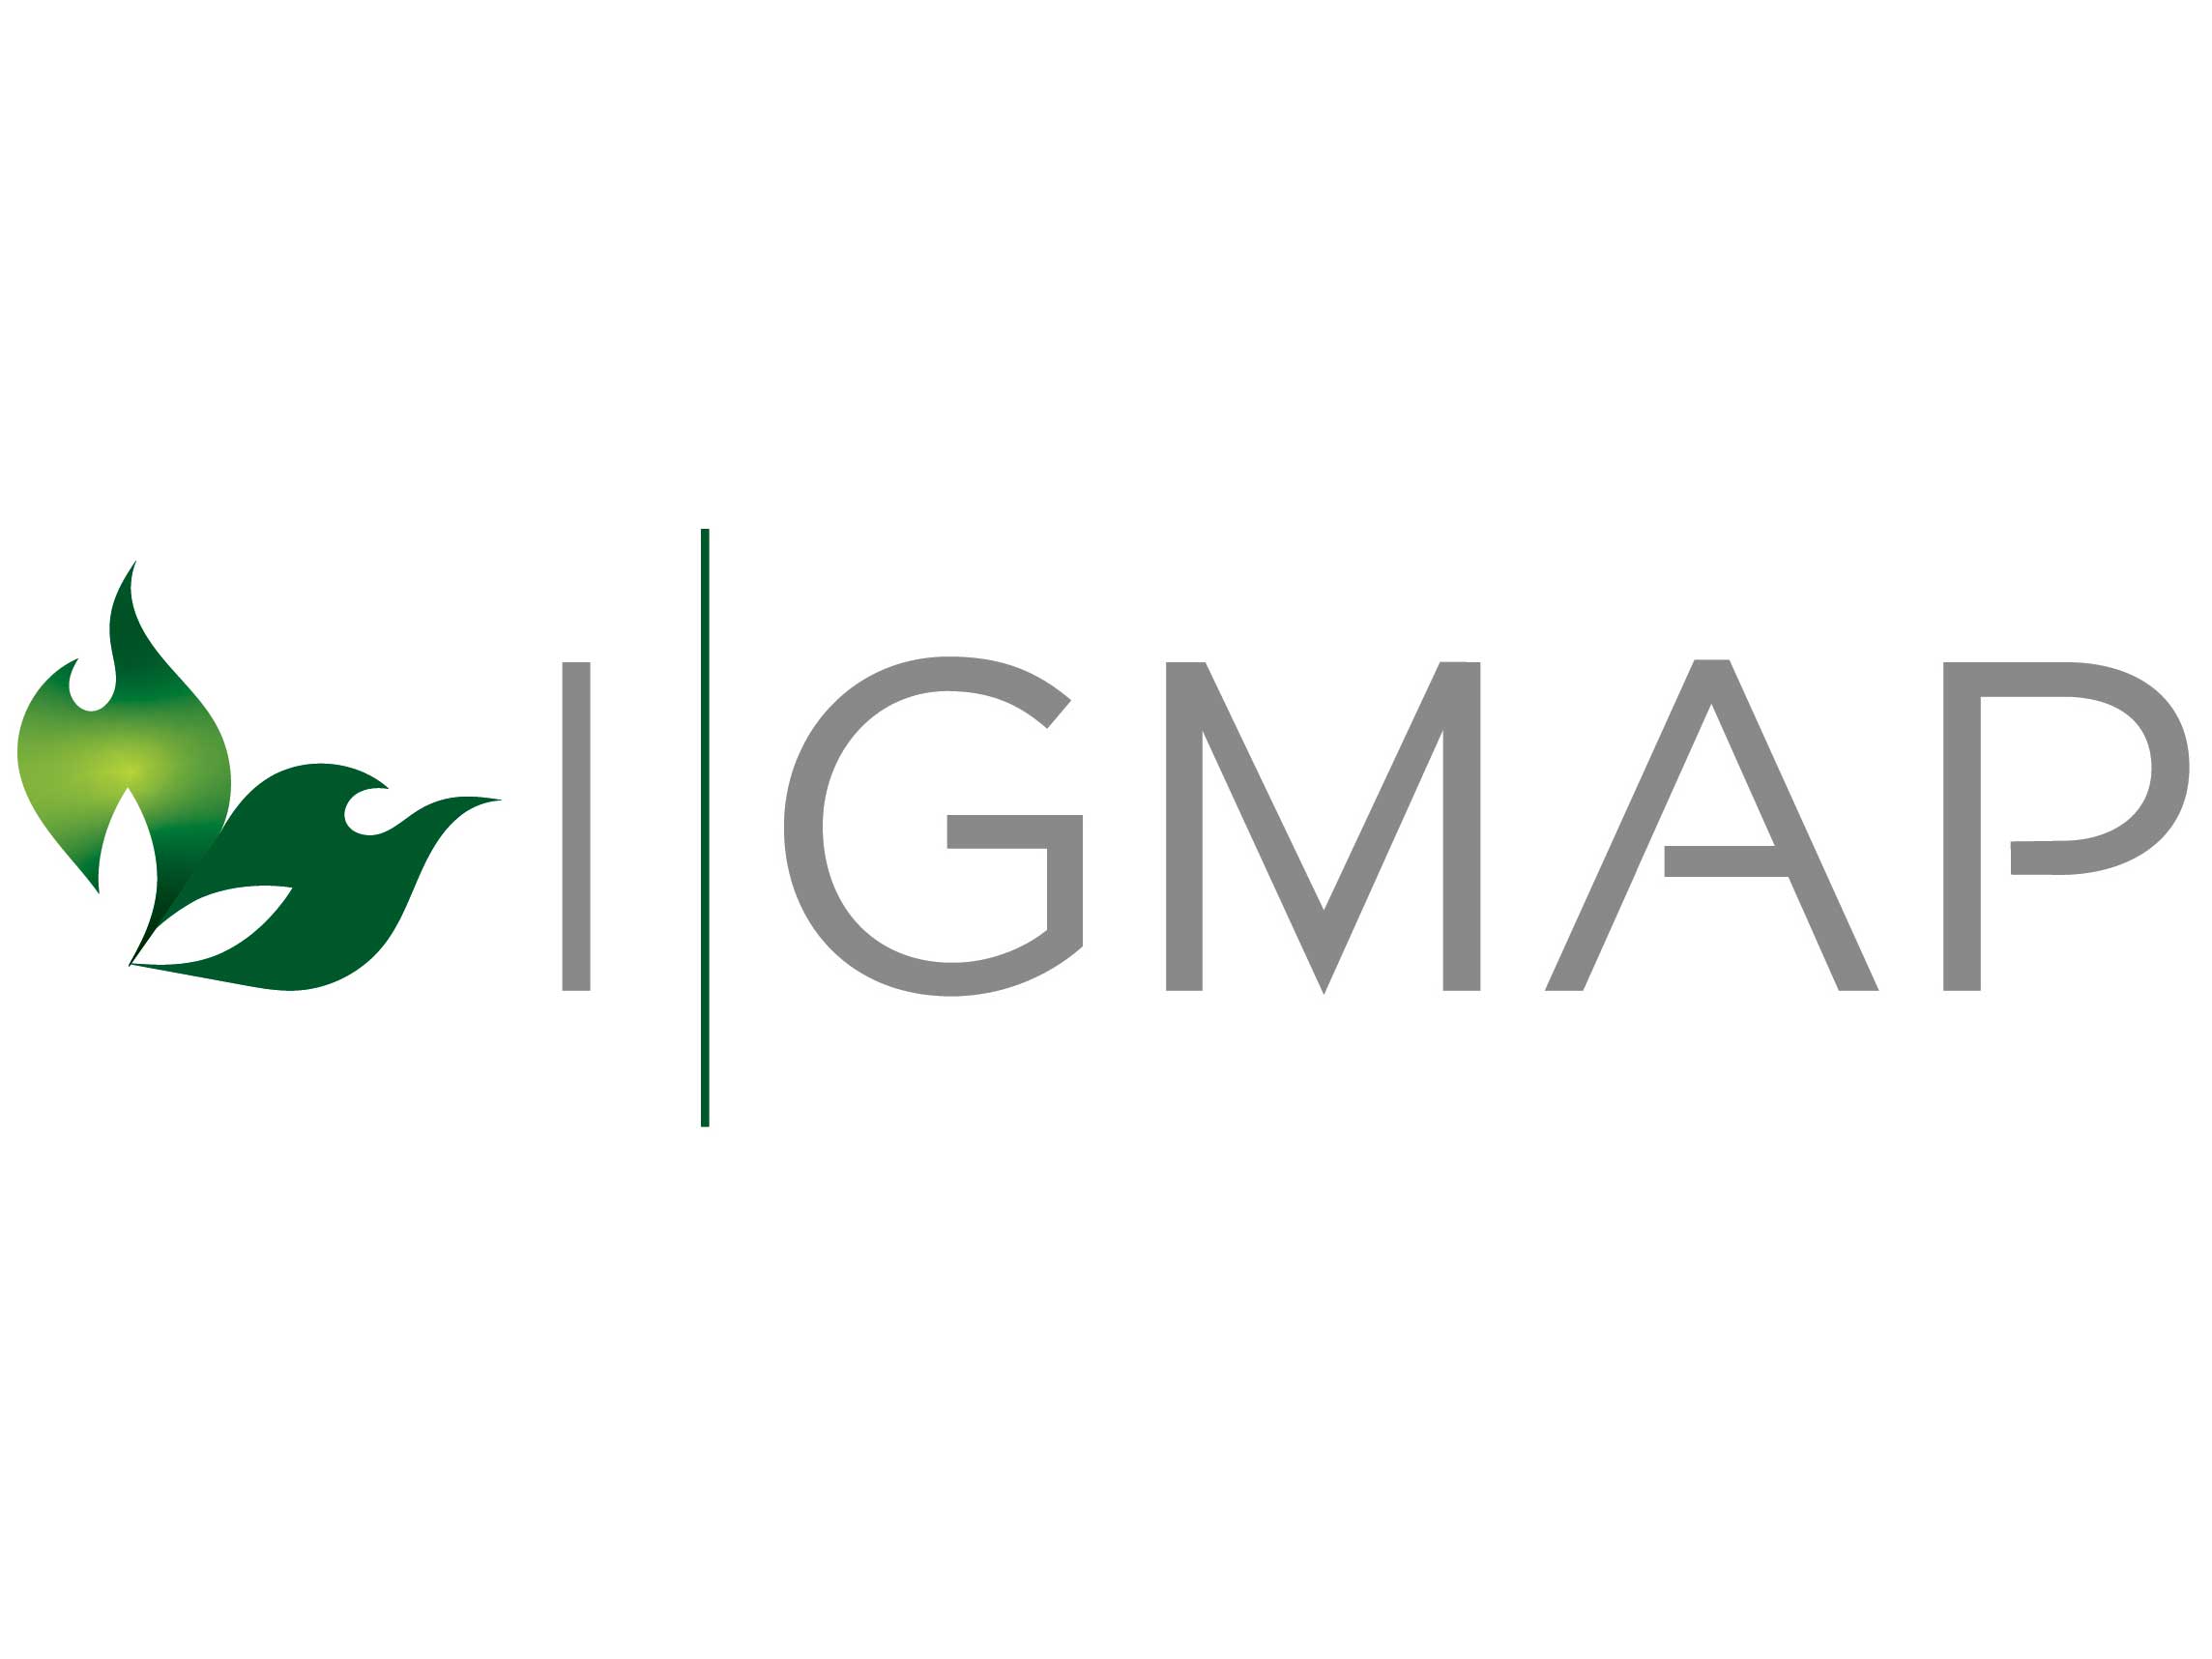 I-GMAP logo